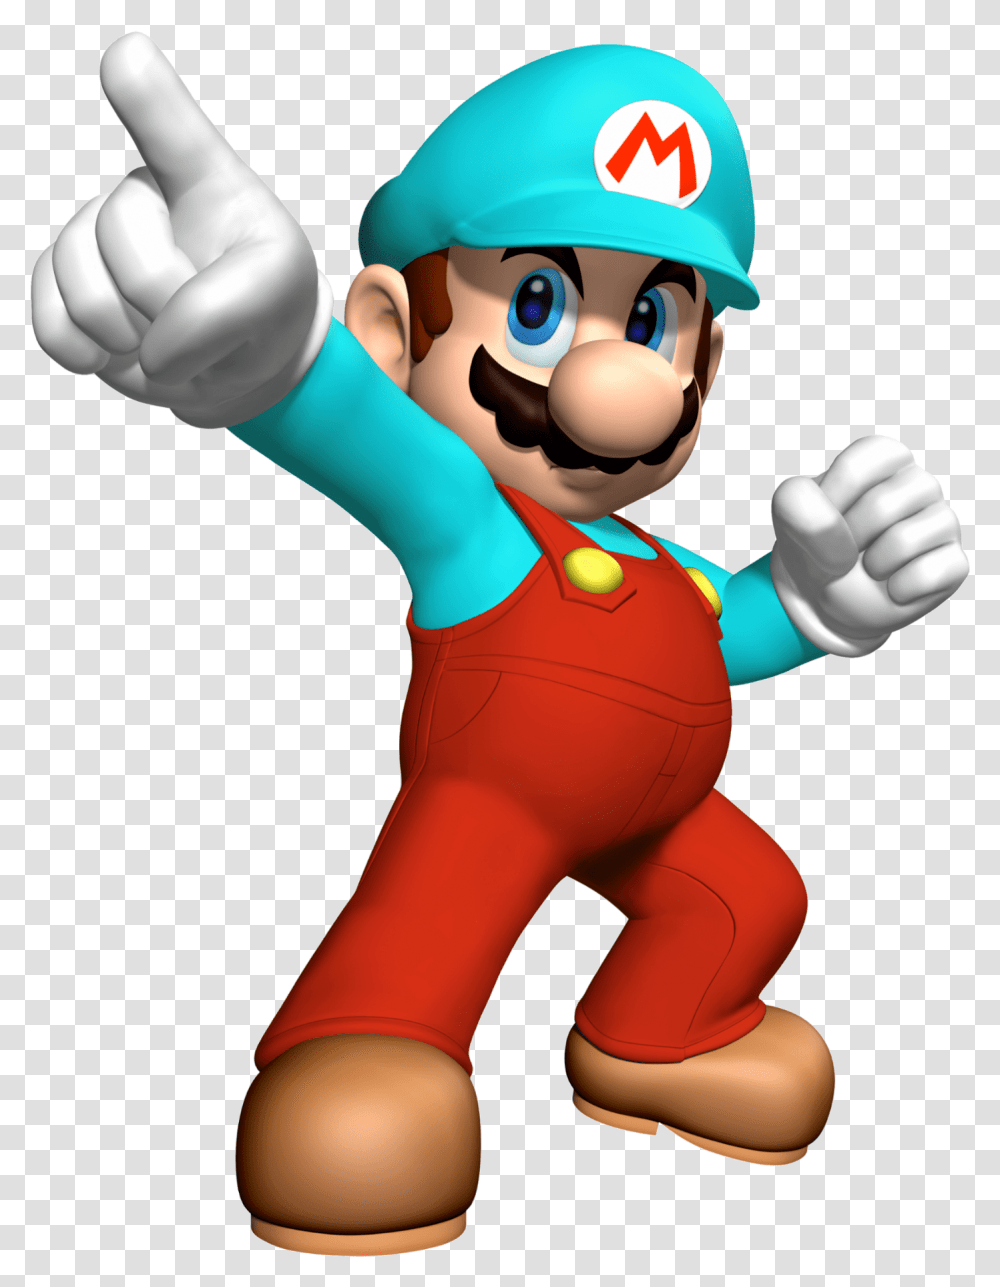 Download Mario Bros 3d Uokplrs Mario With Fire Flower, Super Mario, Helmet, Clothing, Apparel Transparent Png